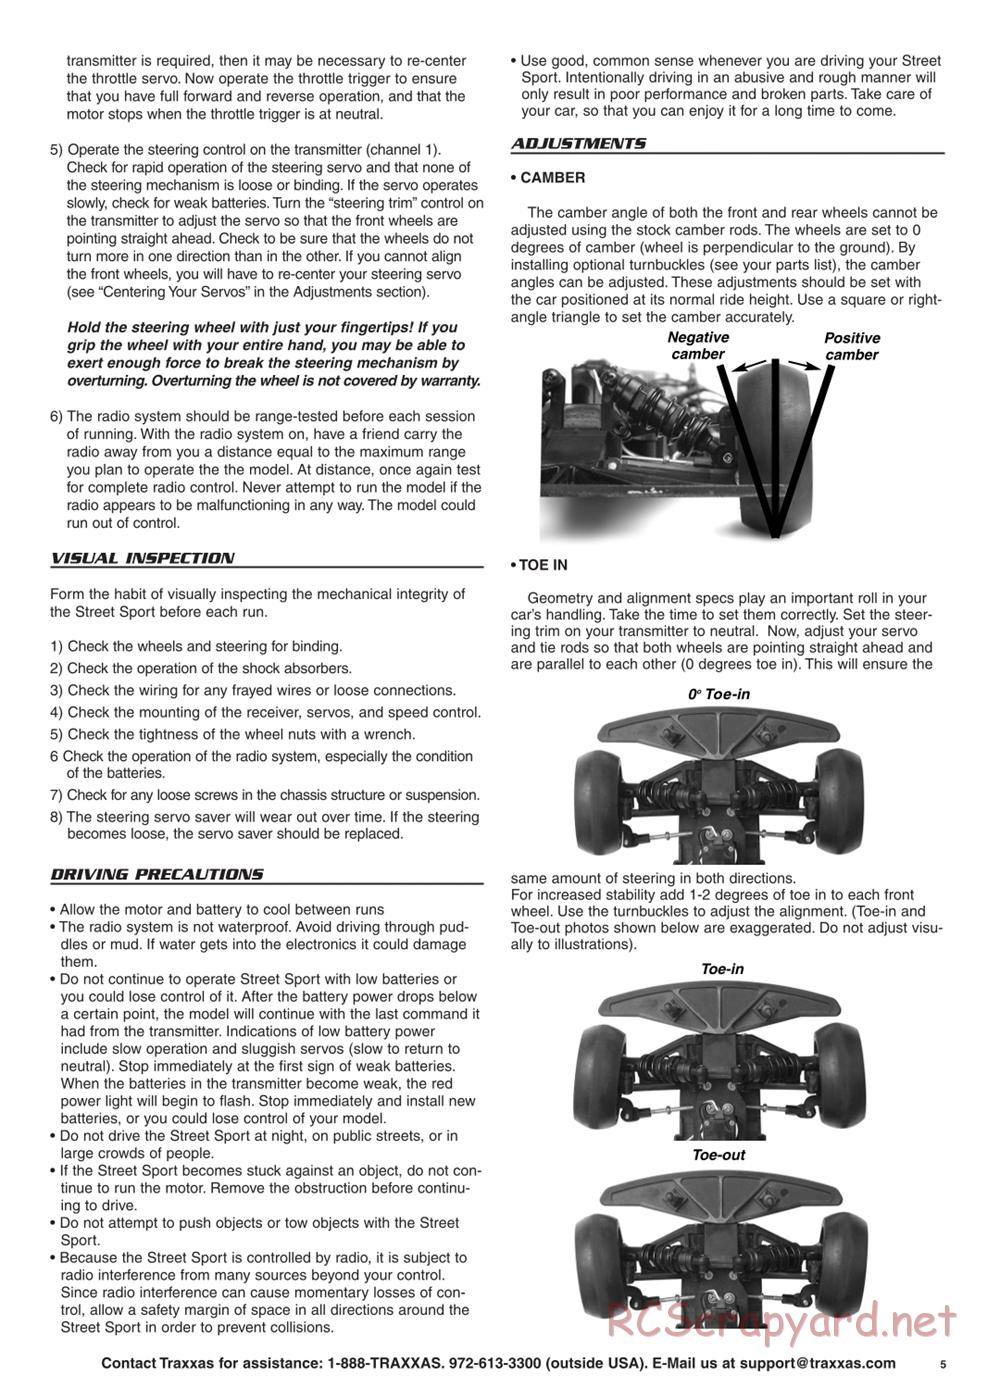 Traxxas - Street Sport - Manual - Page 5